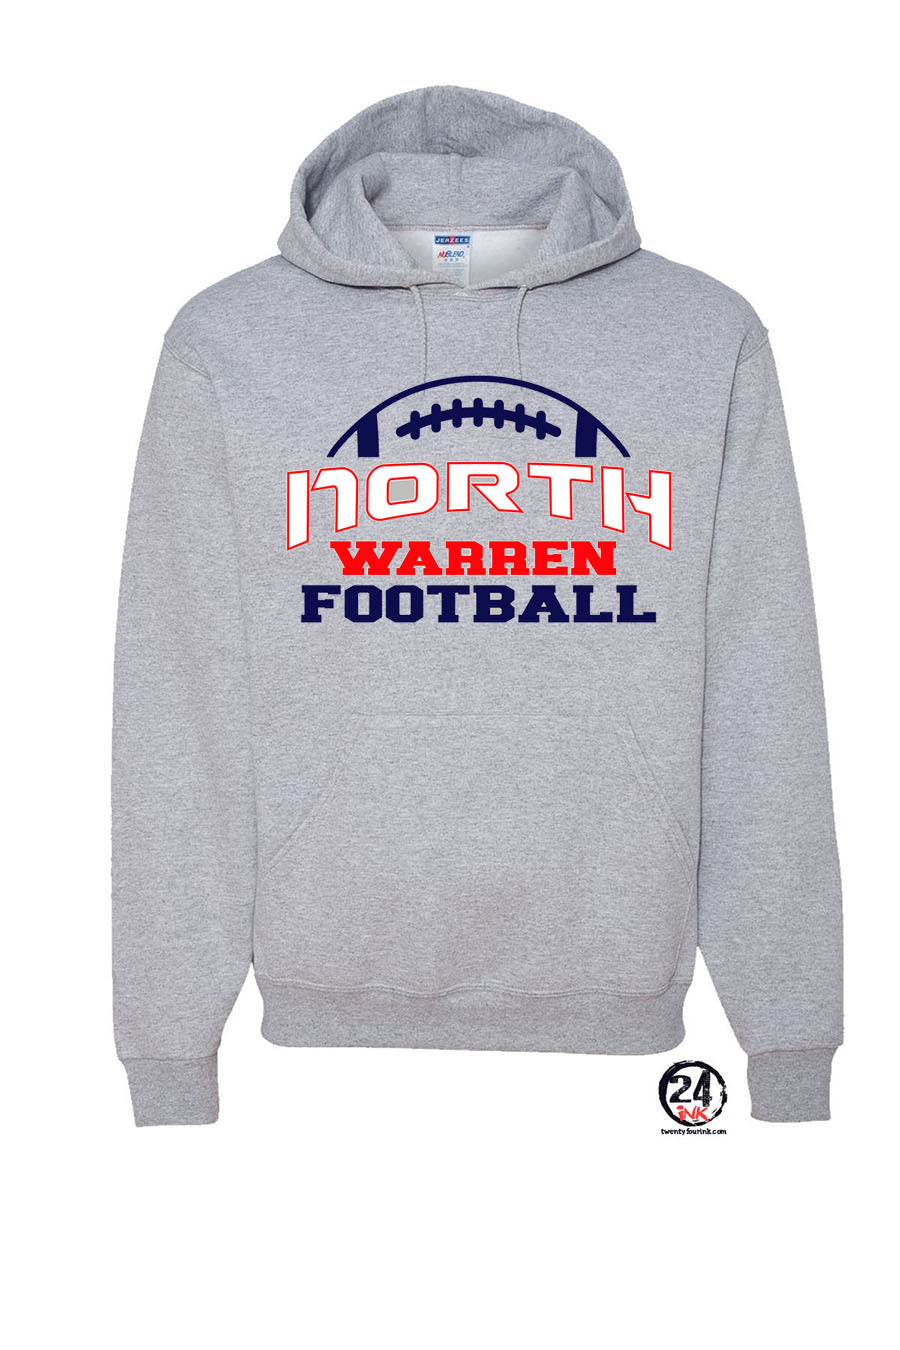 NW Football Design 1 Hooded Sweatshirt